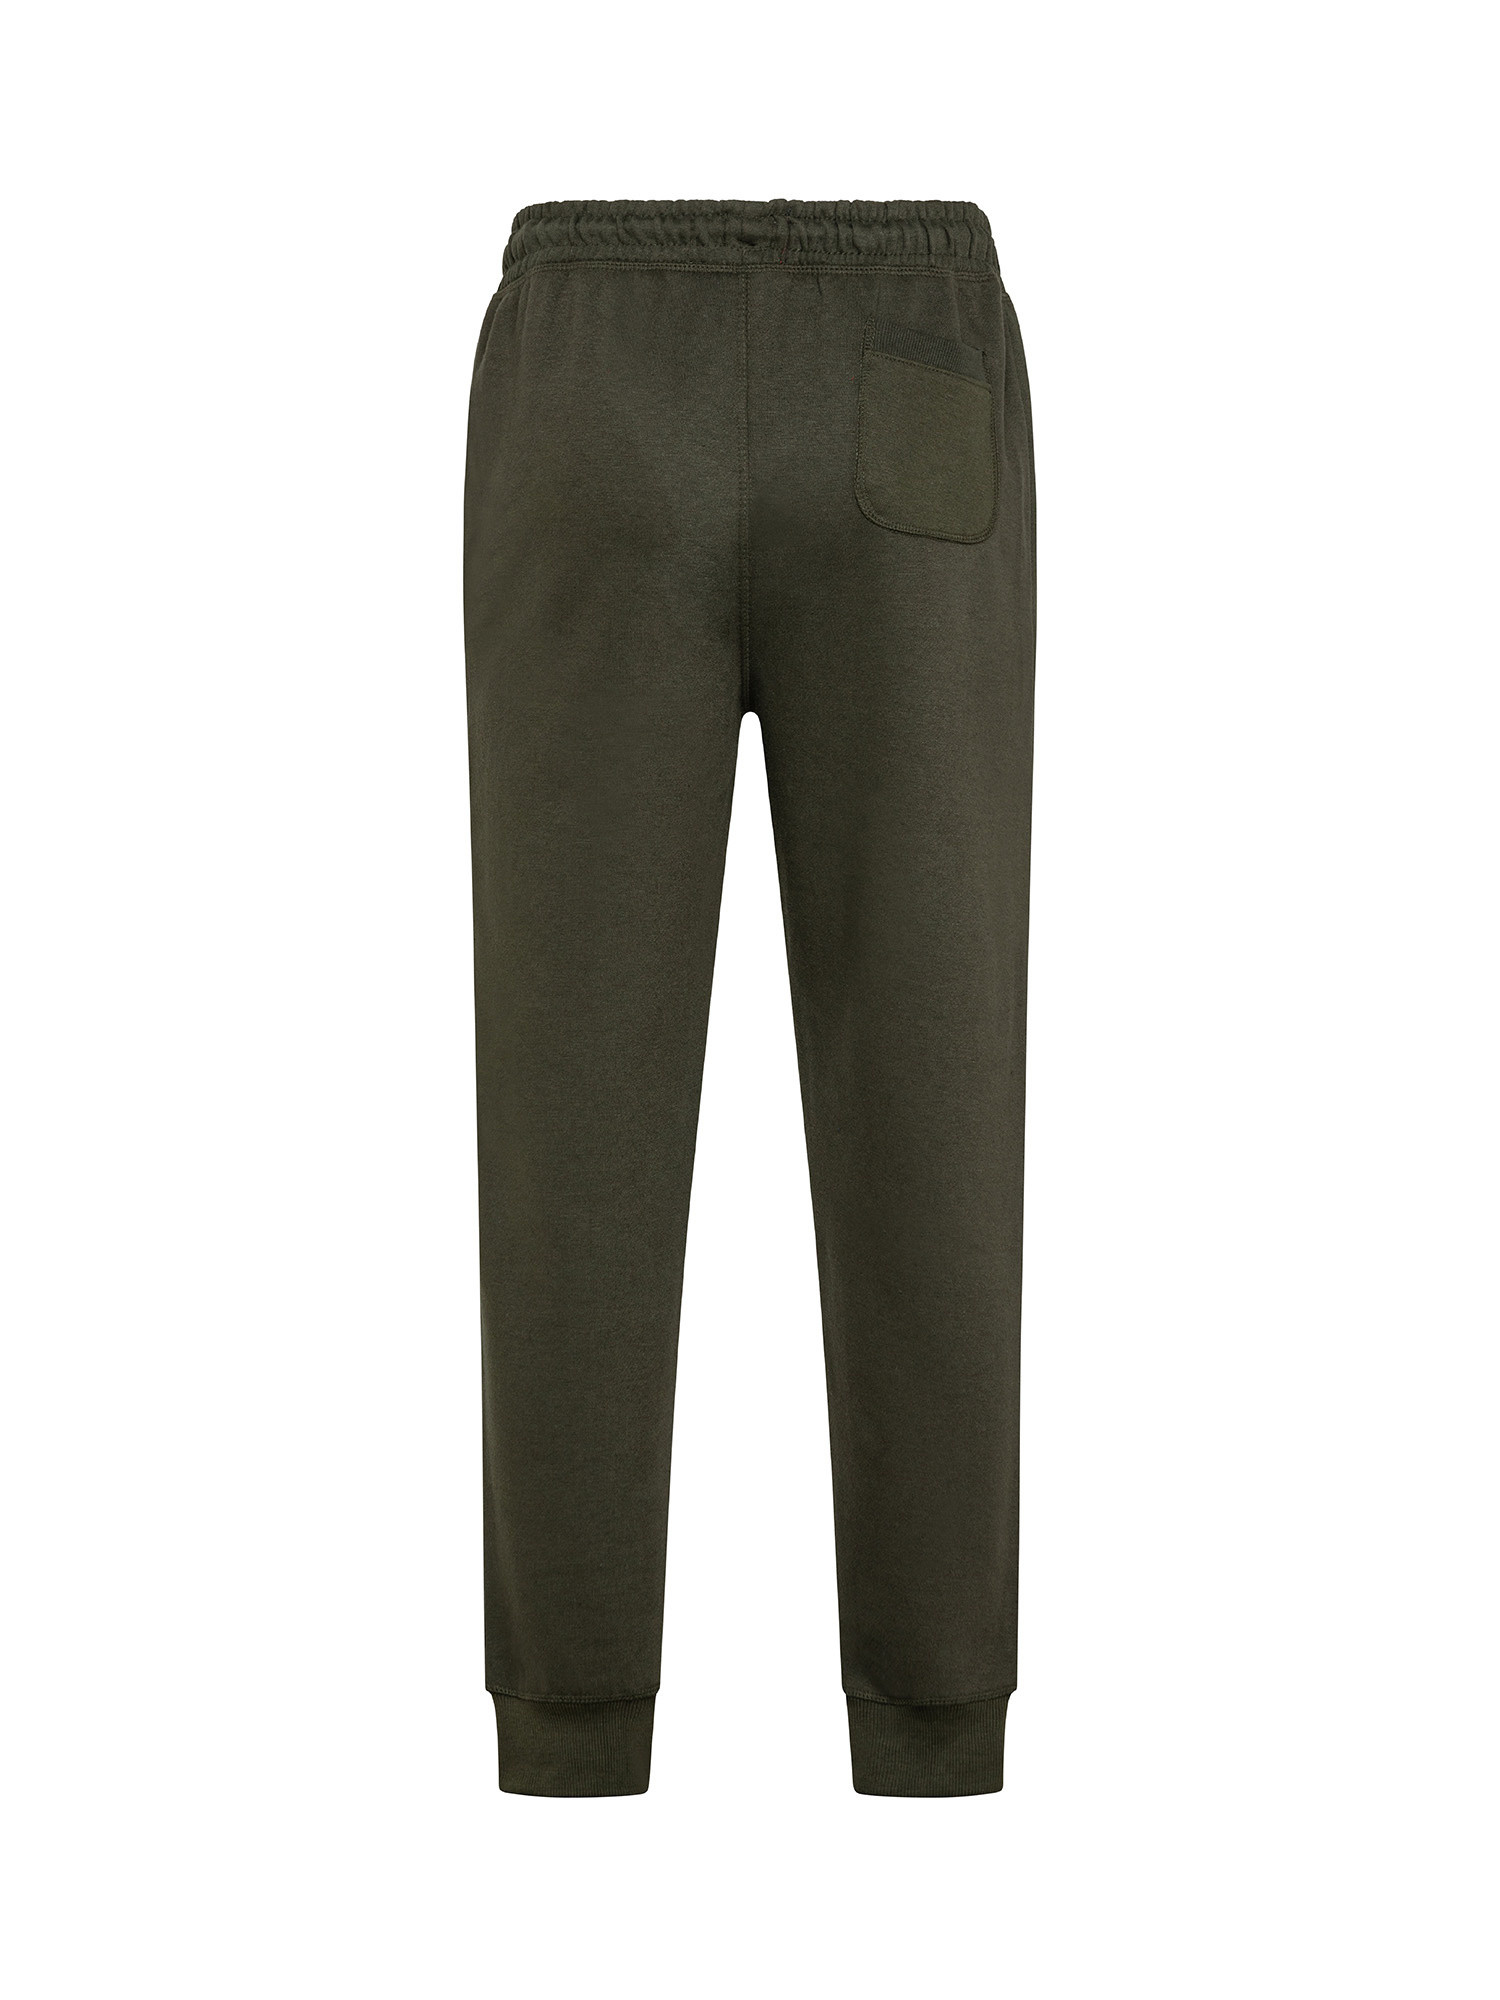 JCT - Pantalone con stampa, Verde, large image number 1